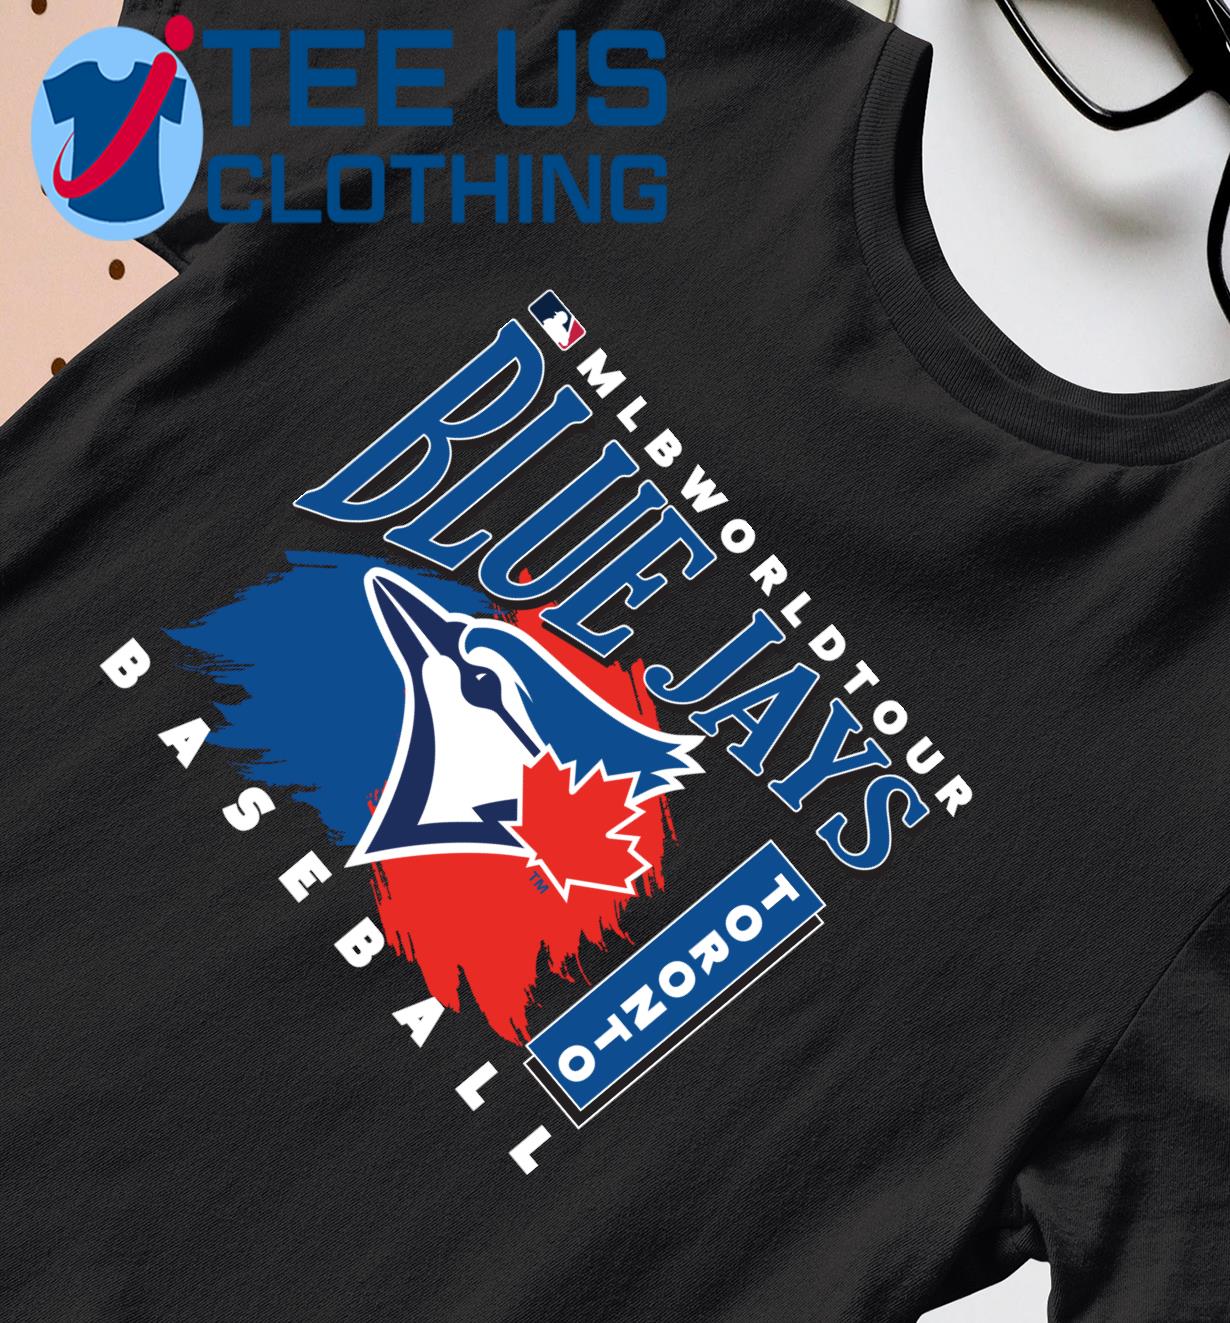 MLB World Tour Toronto Blue Jays logo T-shirt, hoodie, sweater